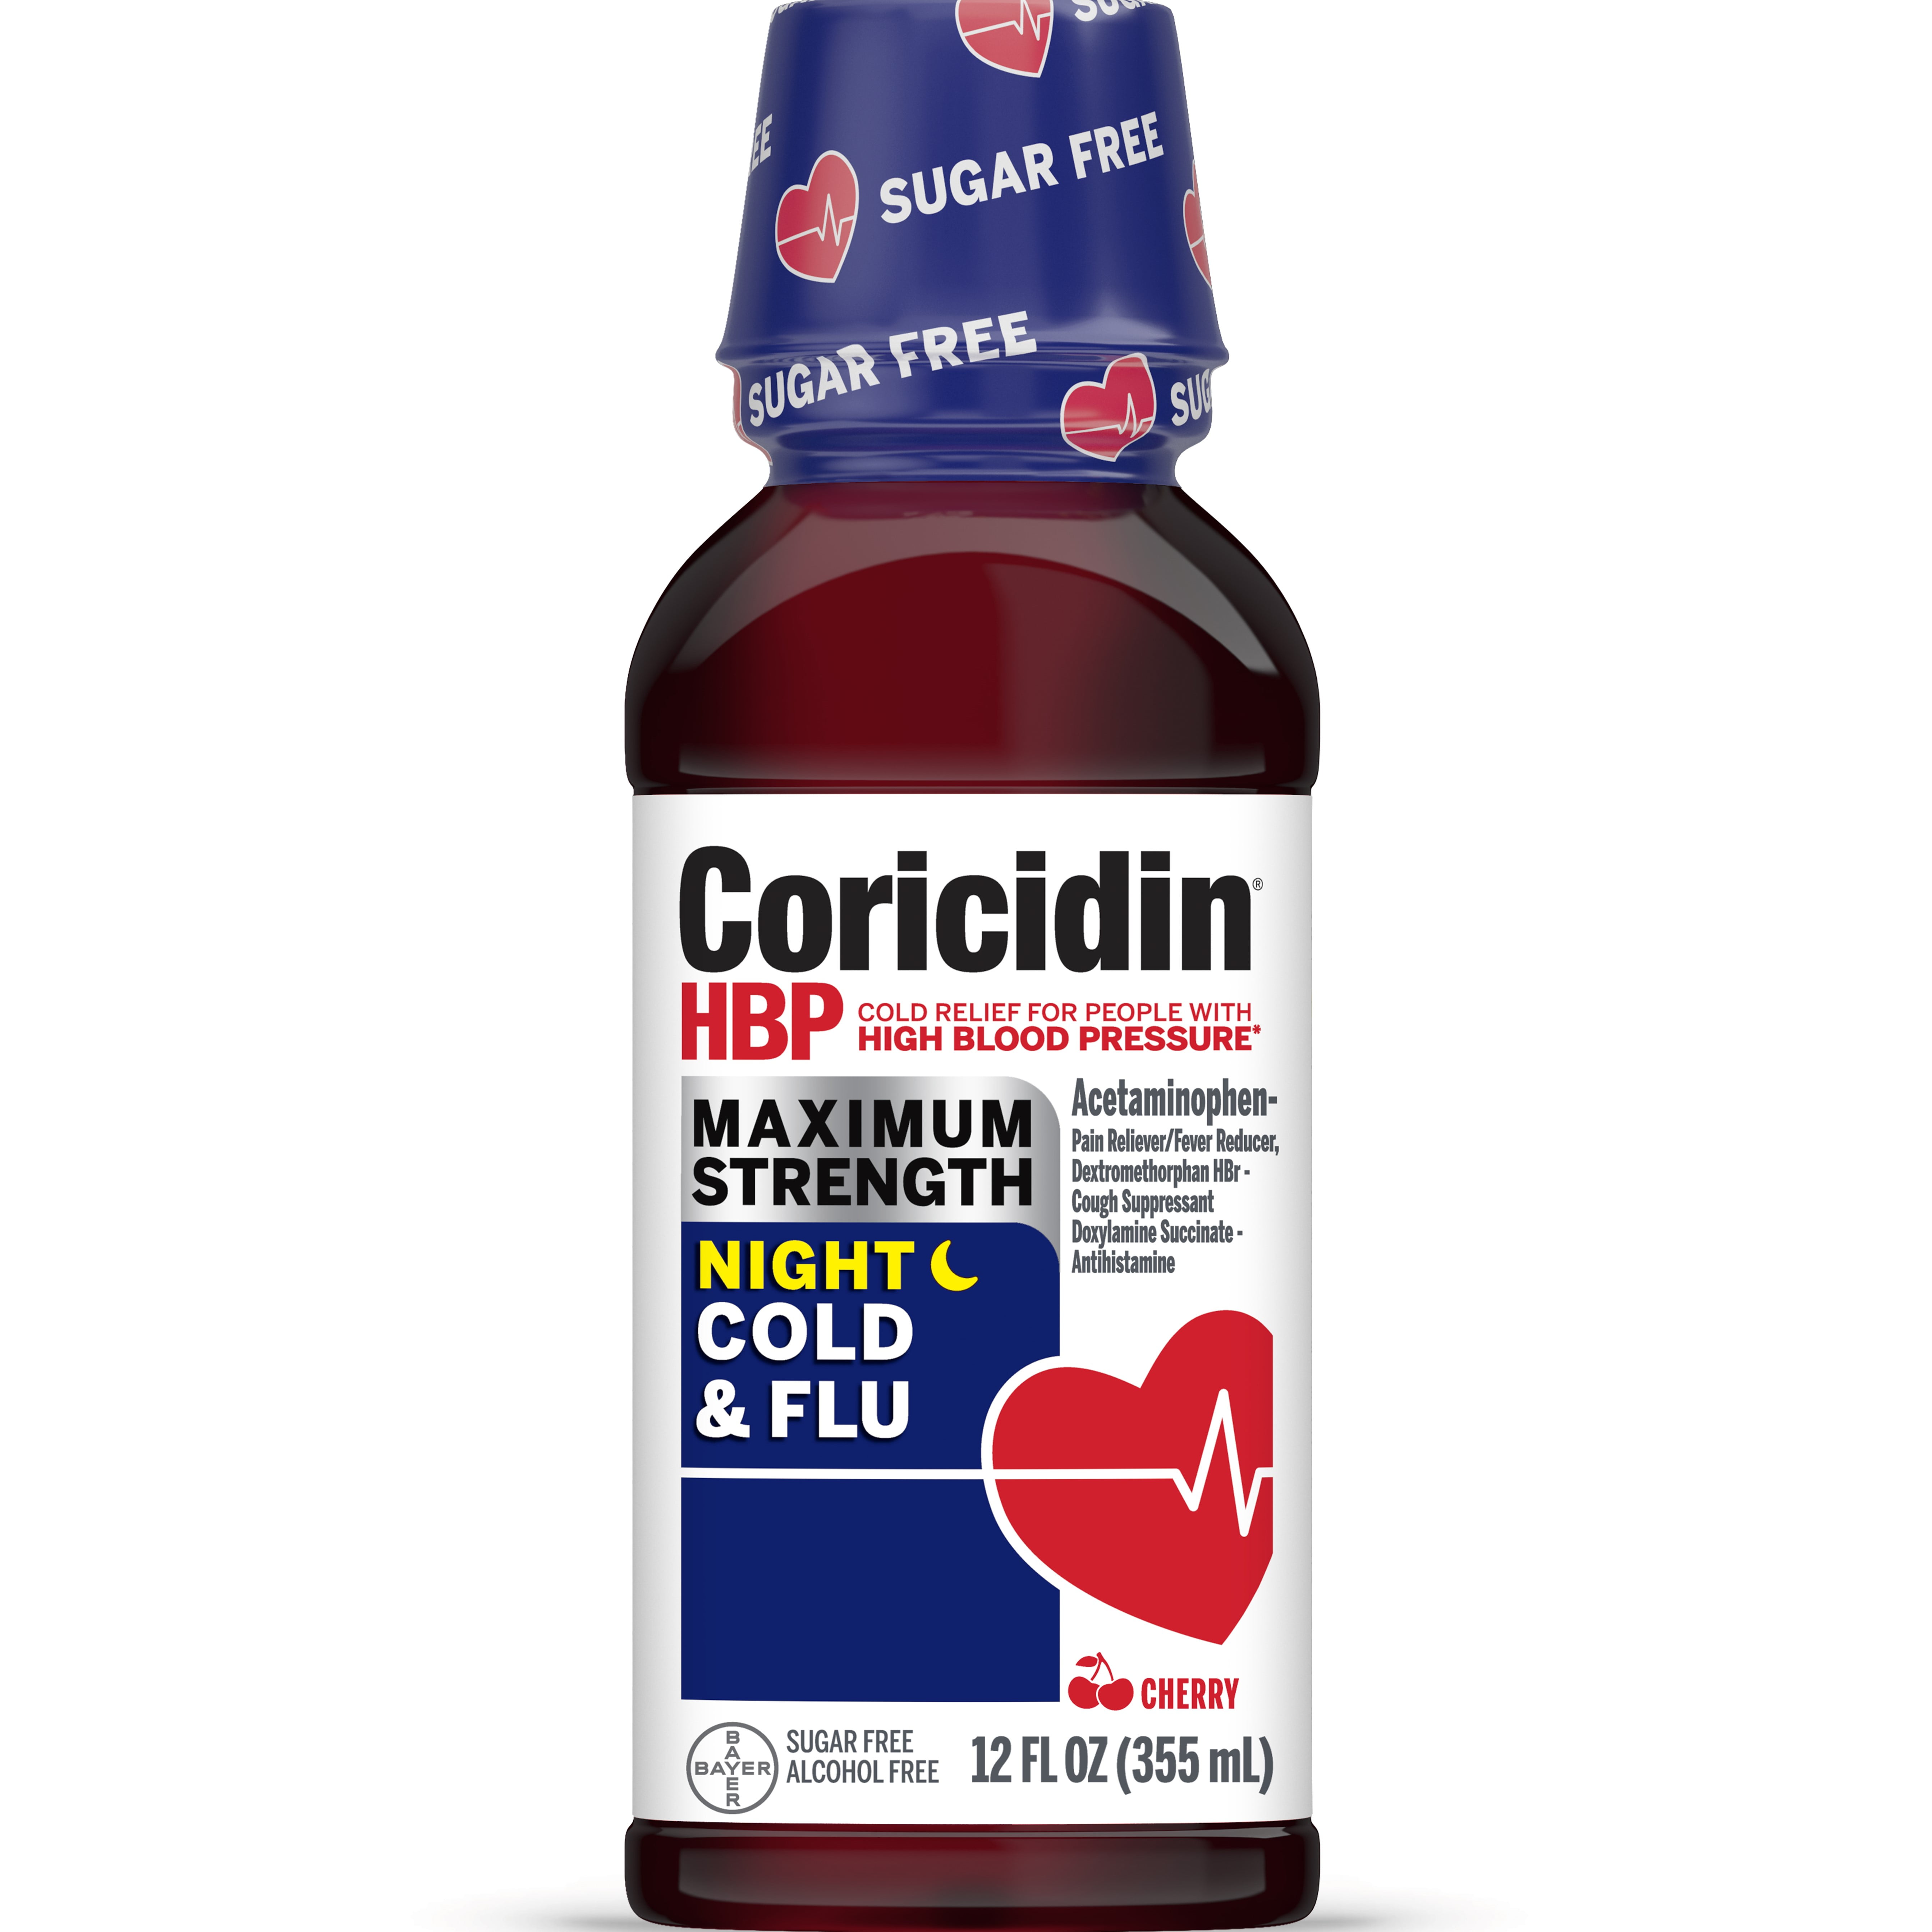 Coricidin HBP Cold & Flu Medicine, Sugar Free Night Liquid, Cherry, 12 fl oz